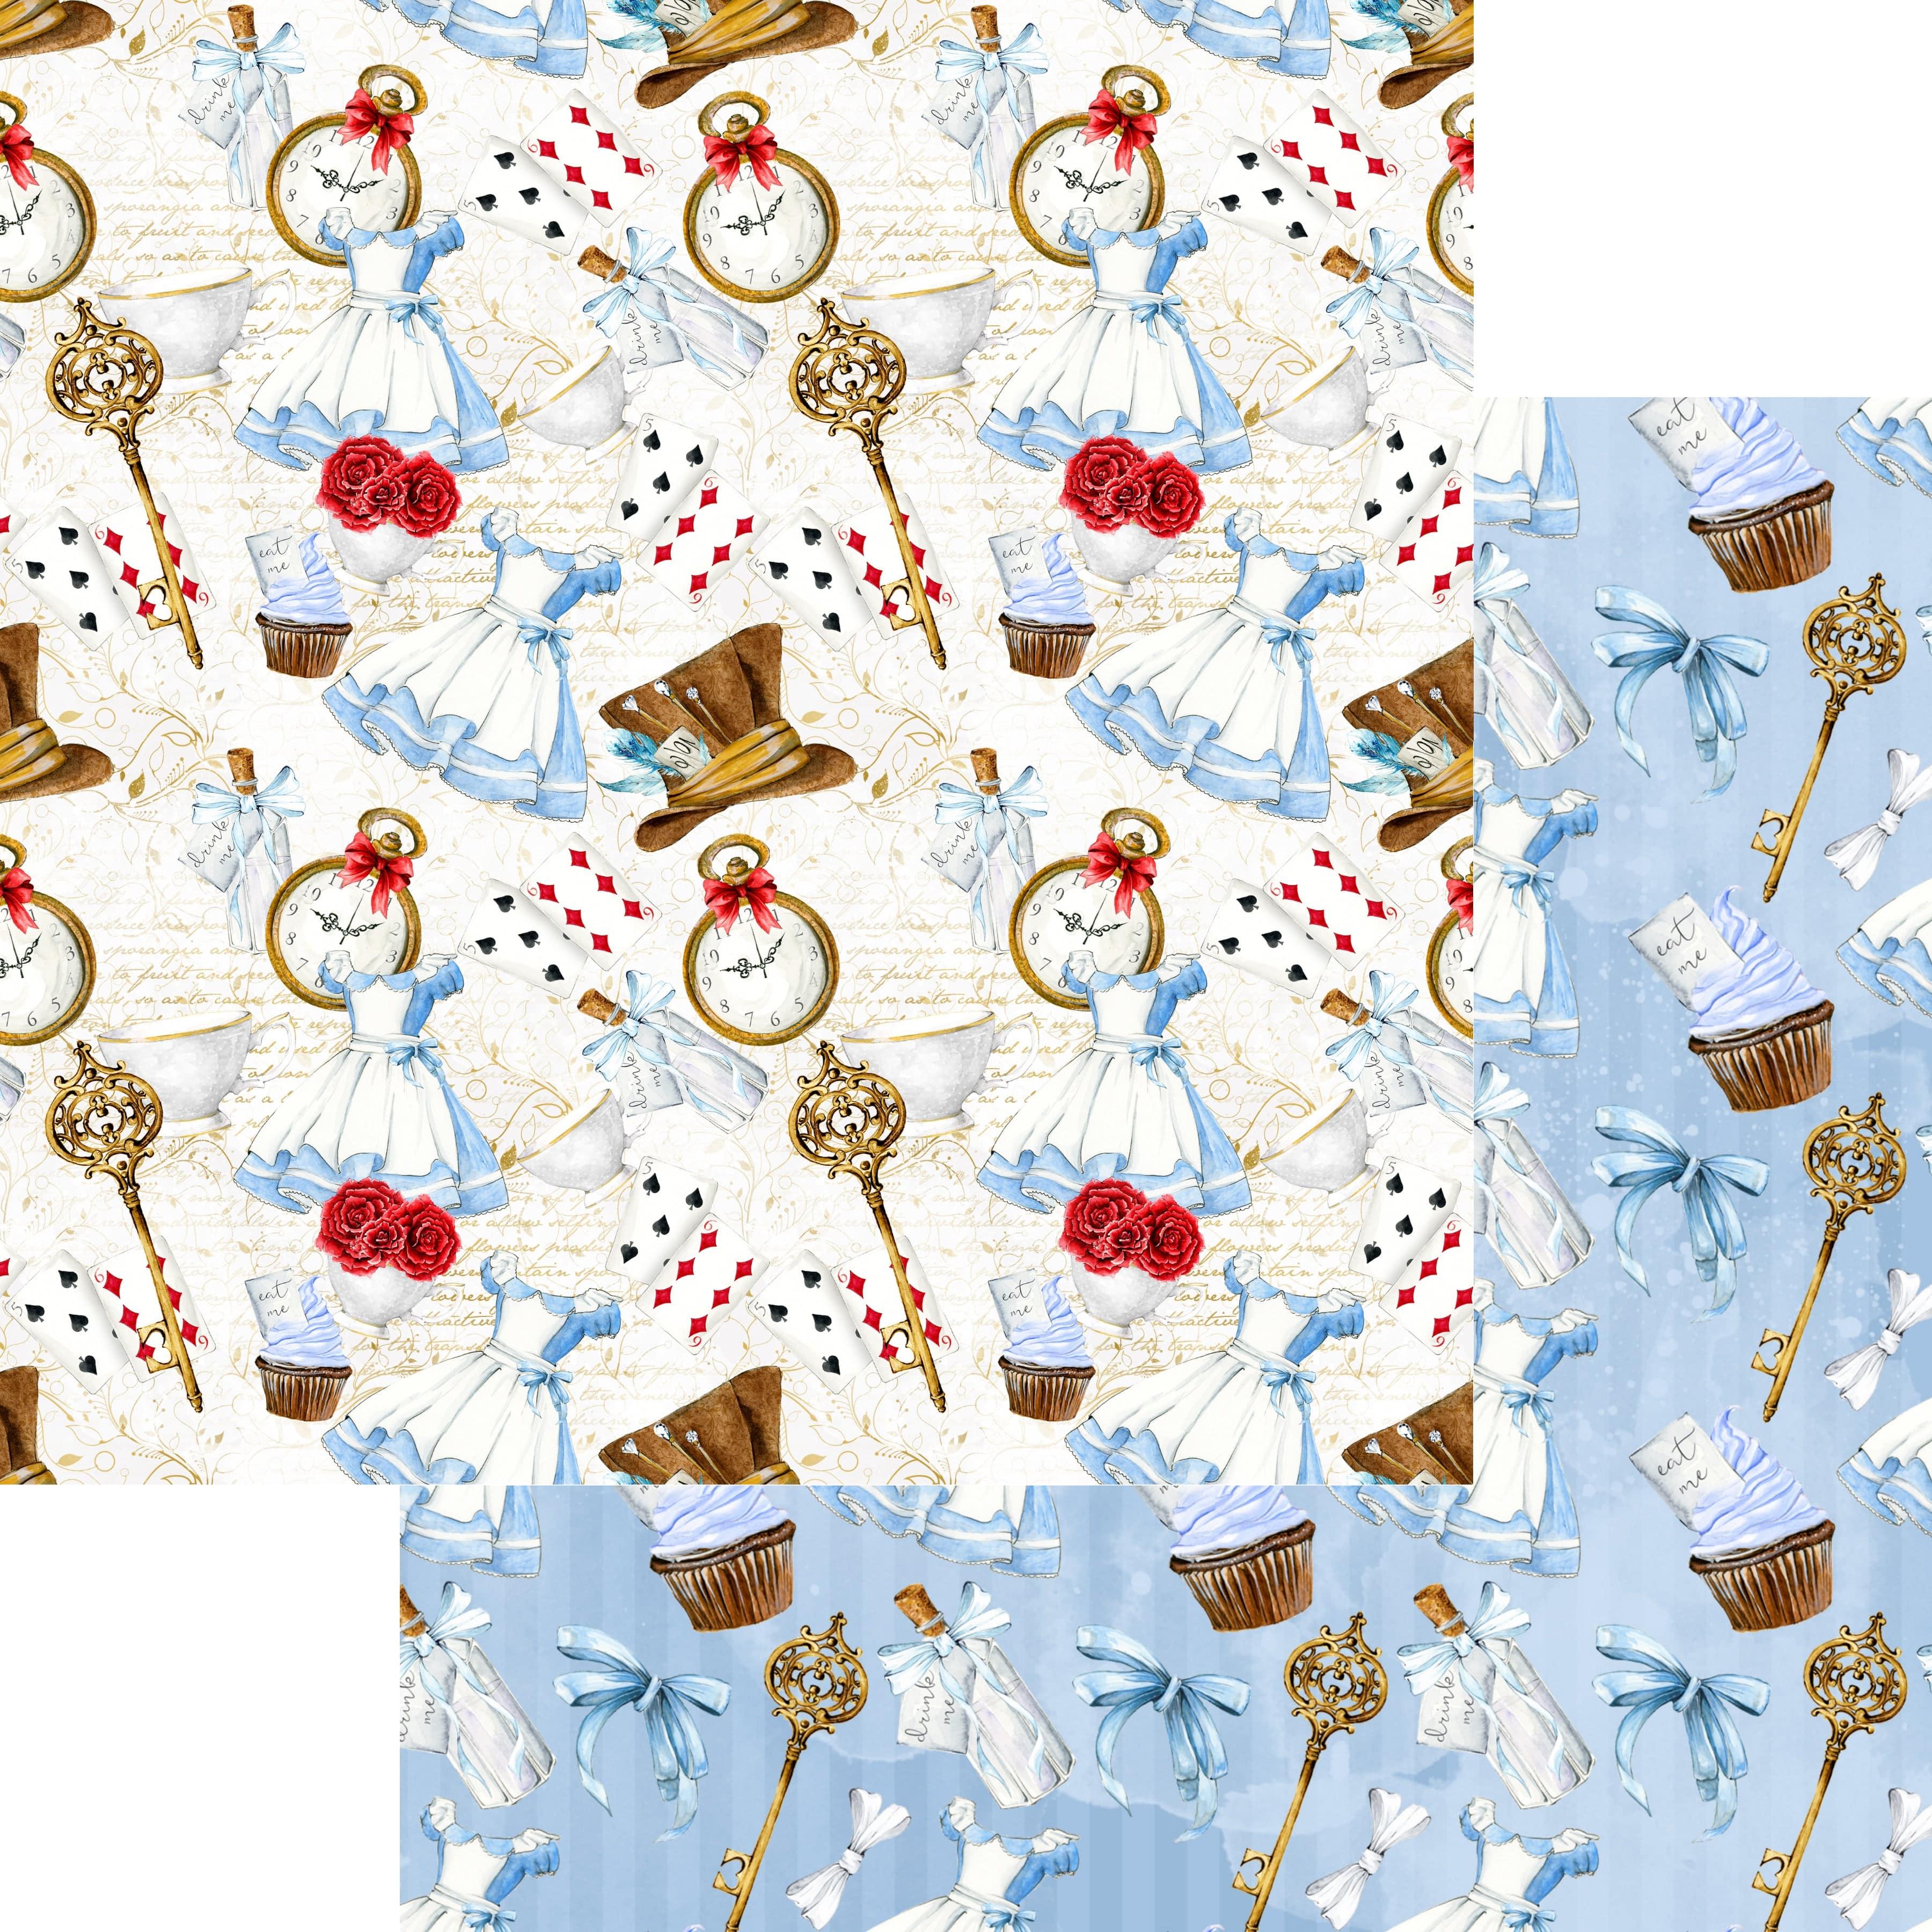 Frou Frou's Alice 12 x 12 Scrapbook Paper & Embellishment Kit by SSC Designs - Scrapbook Supply Companies